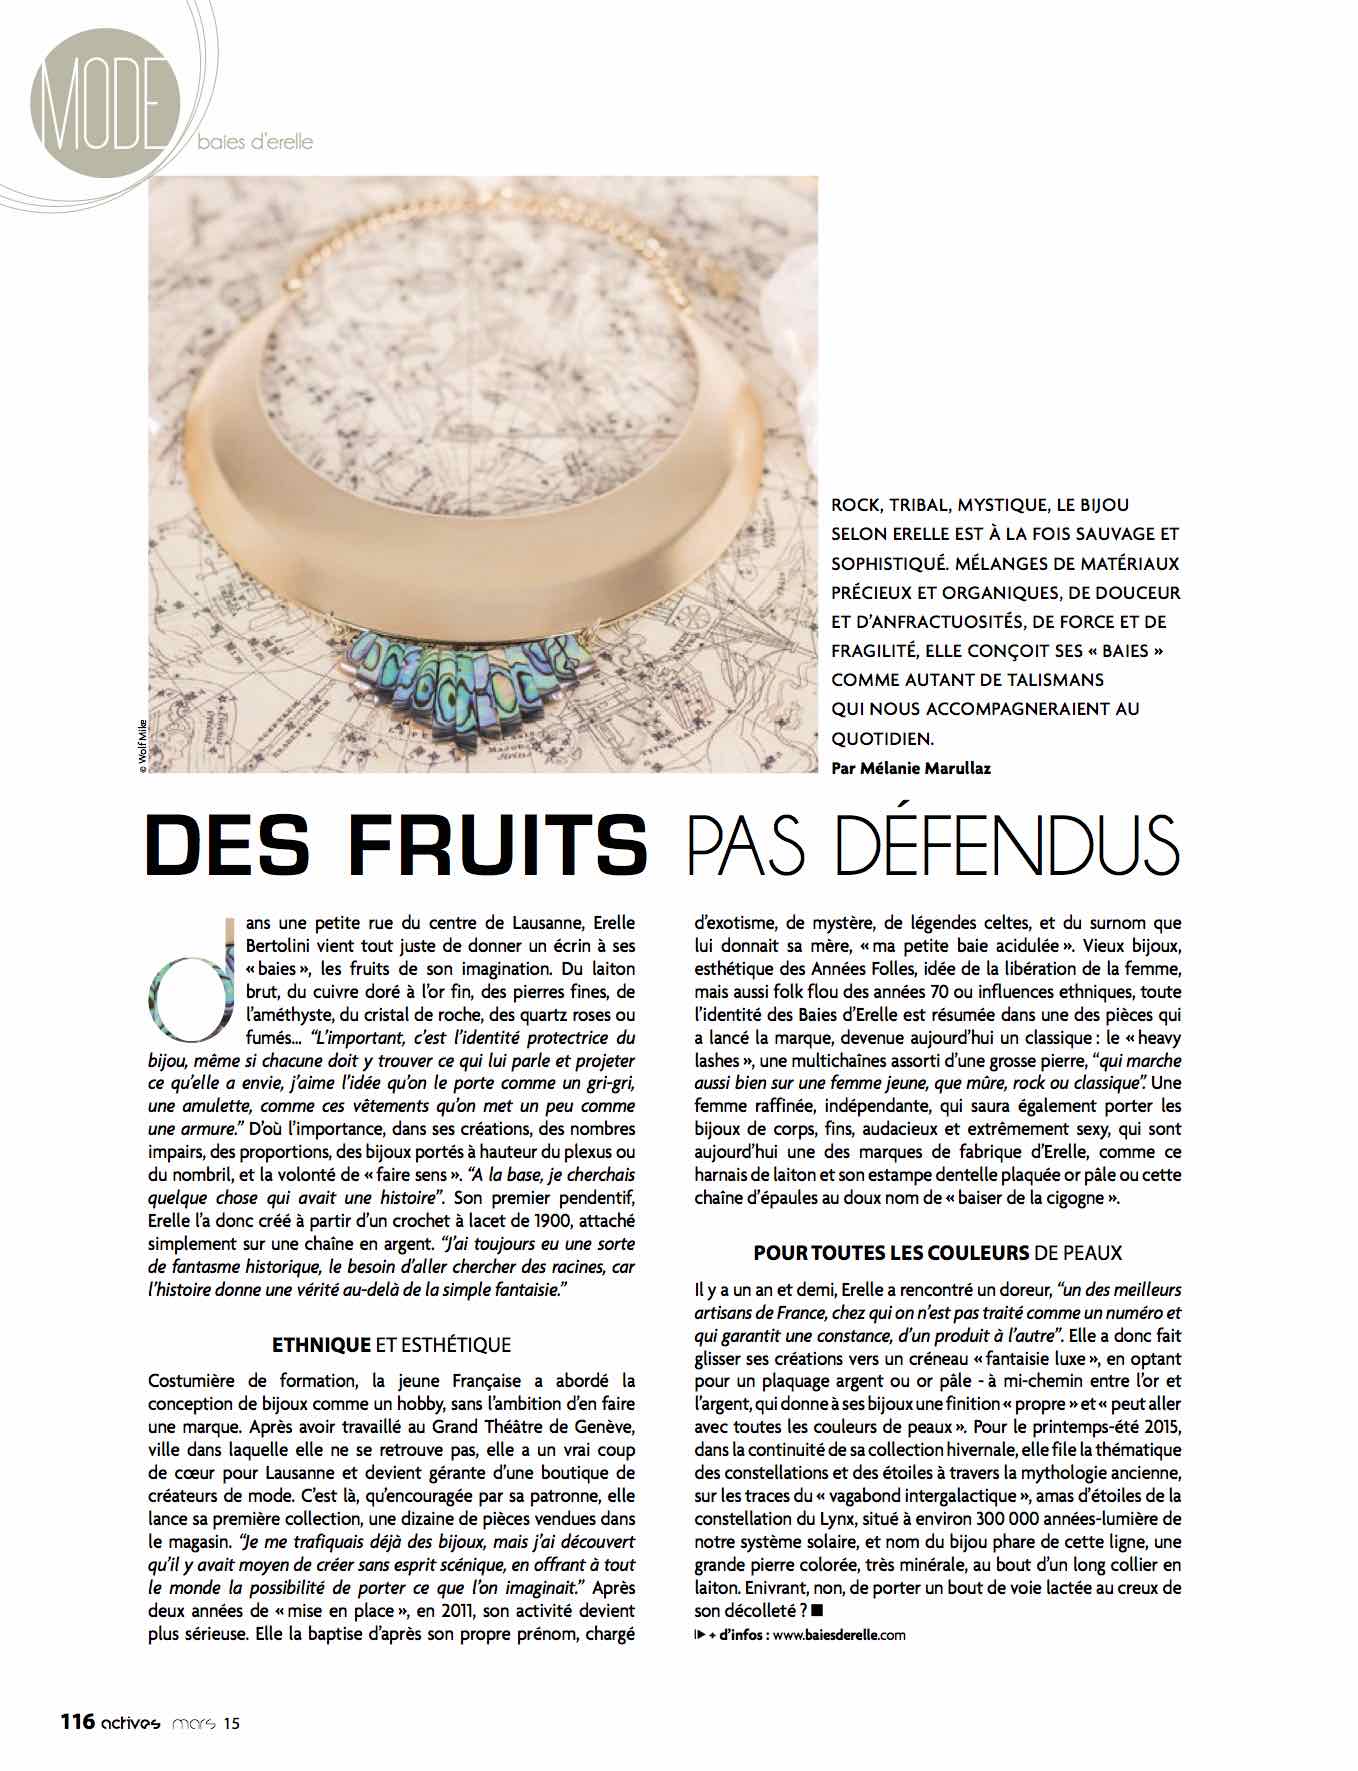 ACTIVES geneva press release Boutique Baies d'Erelle fashion jewelry designer ethical eco-responsible Lausanne